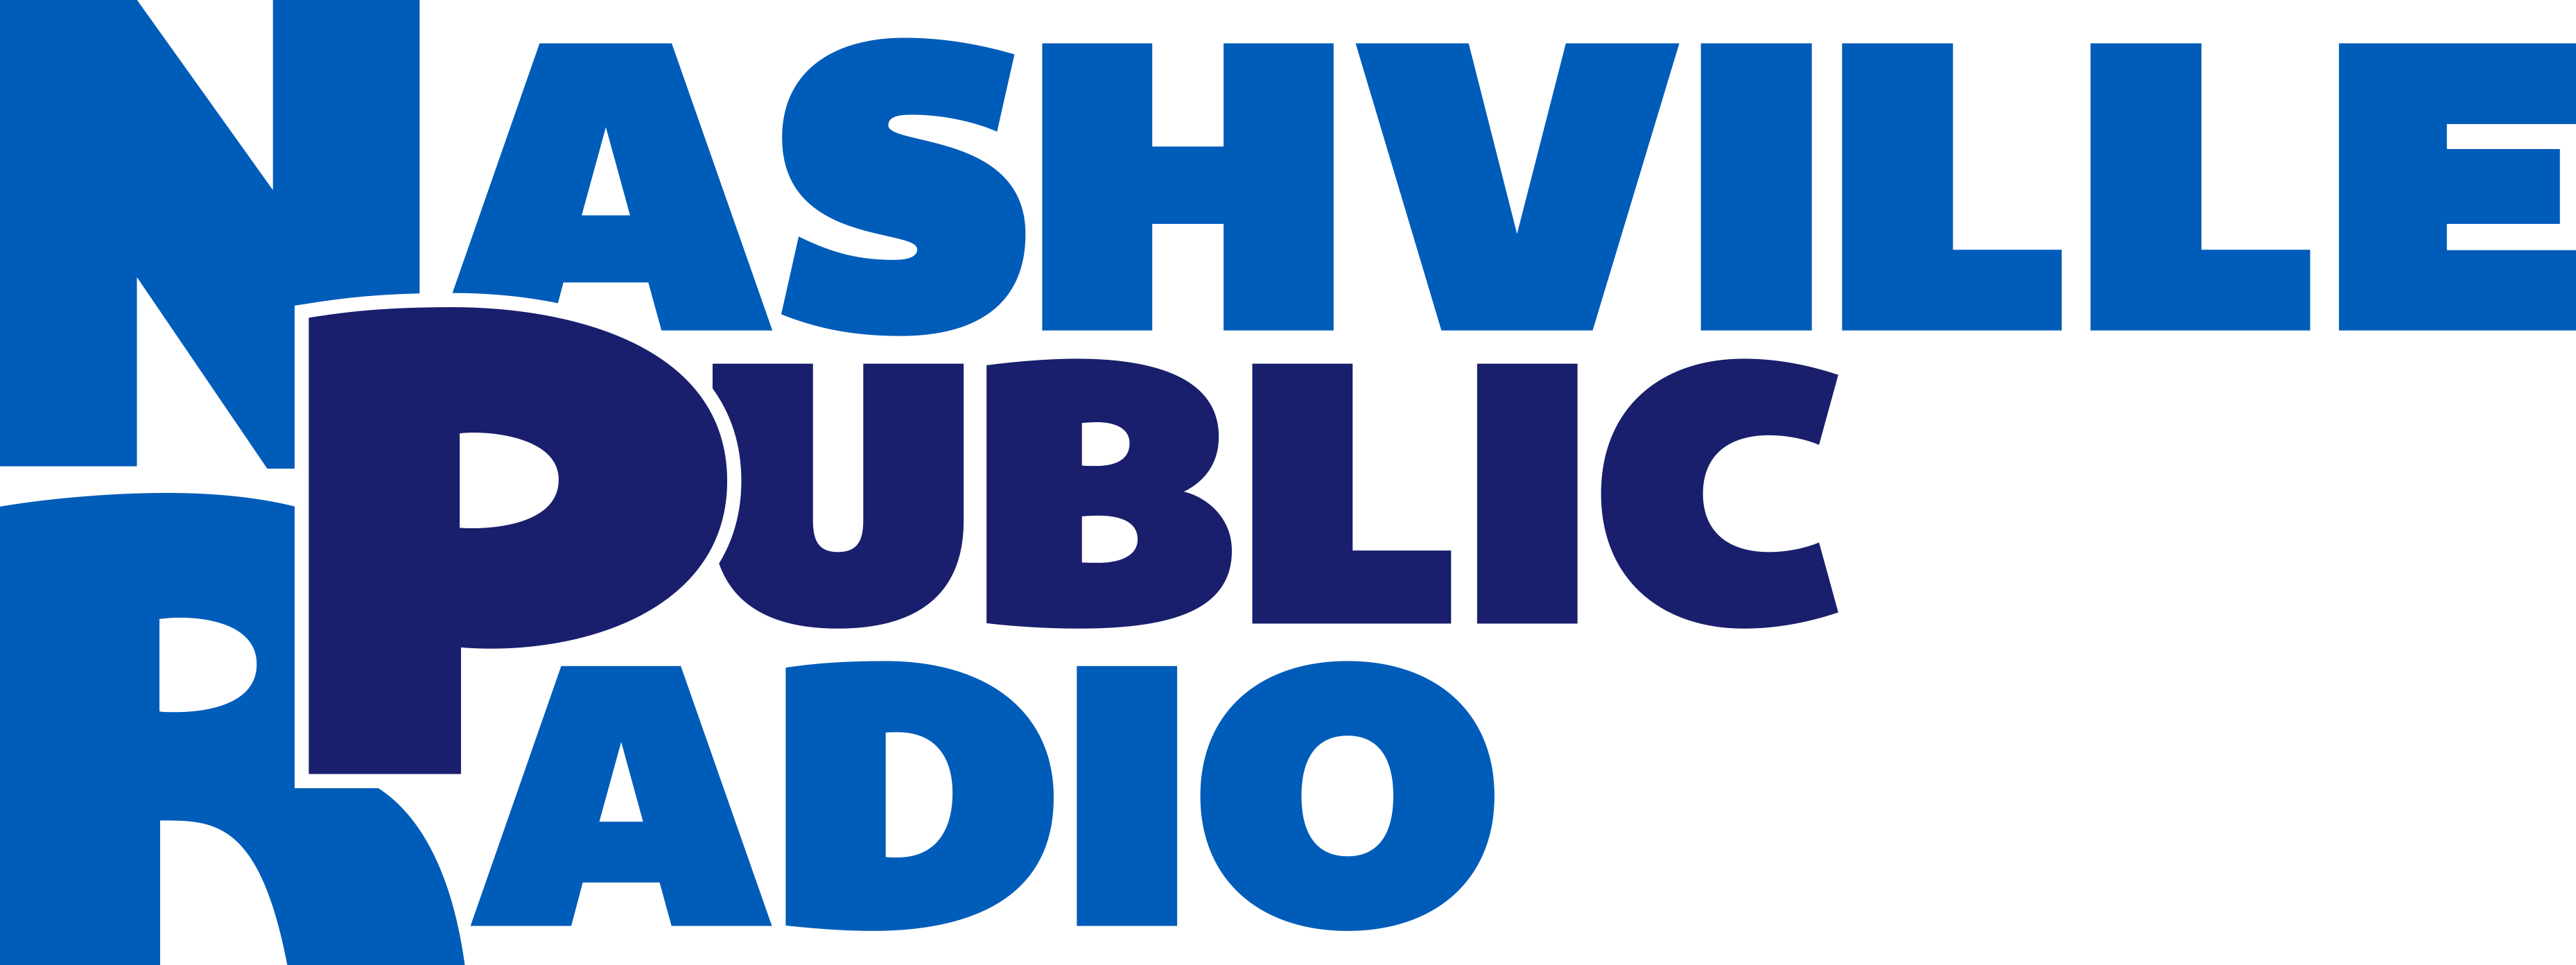 Nashville Public Radio